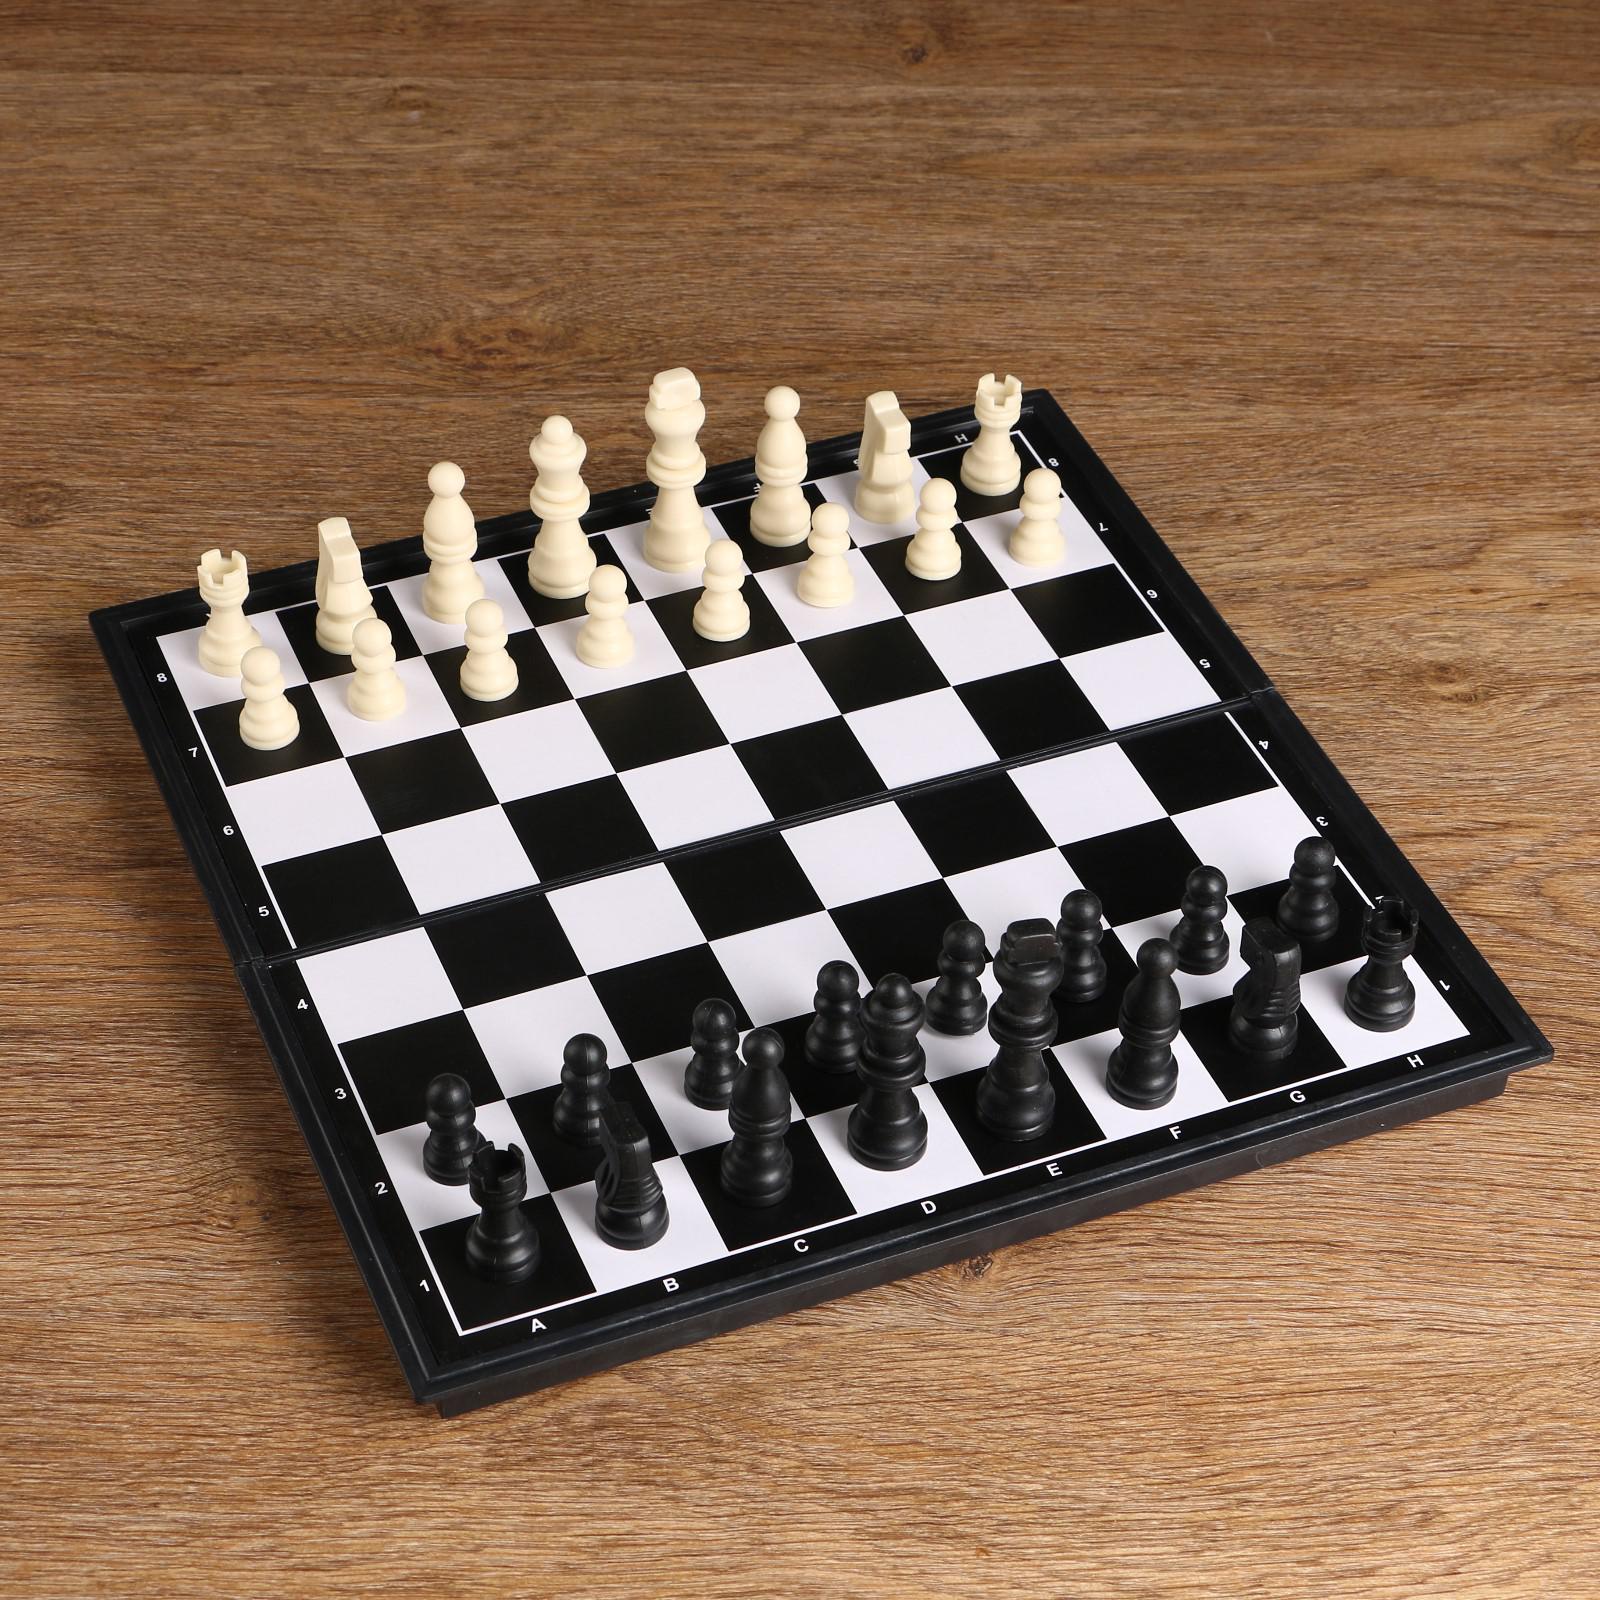 Шахматы Sima-Land «Слит» 31х31 см король h 6.5 см пешка h 3 см - фото 1